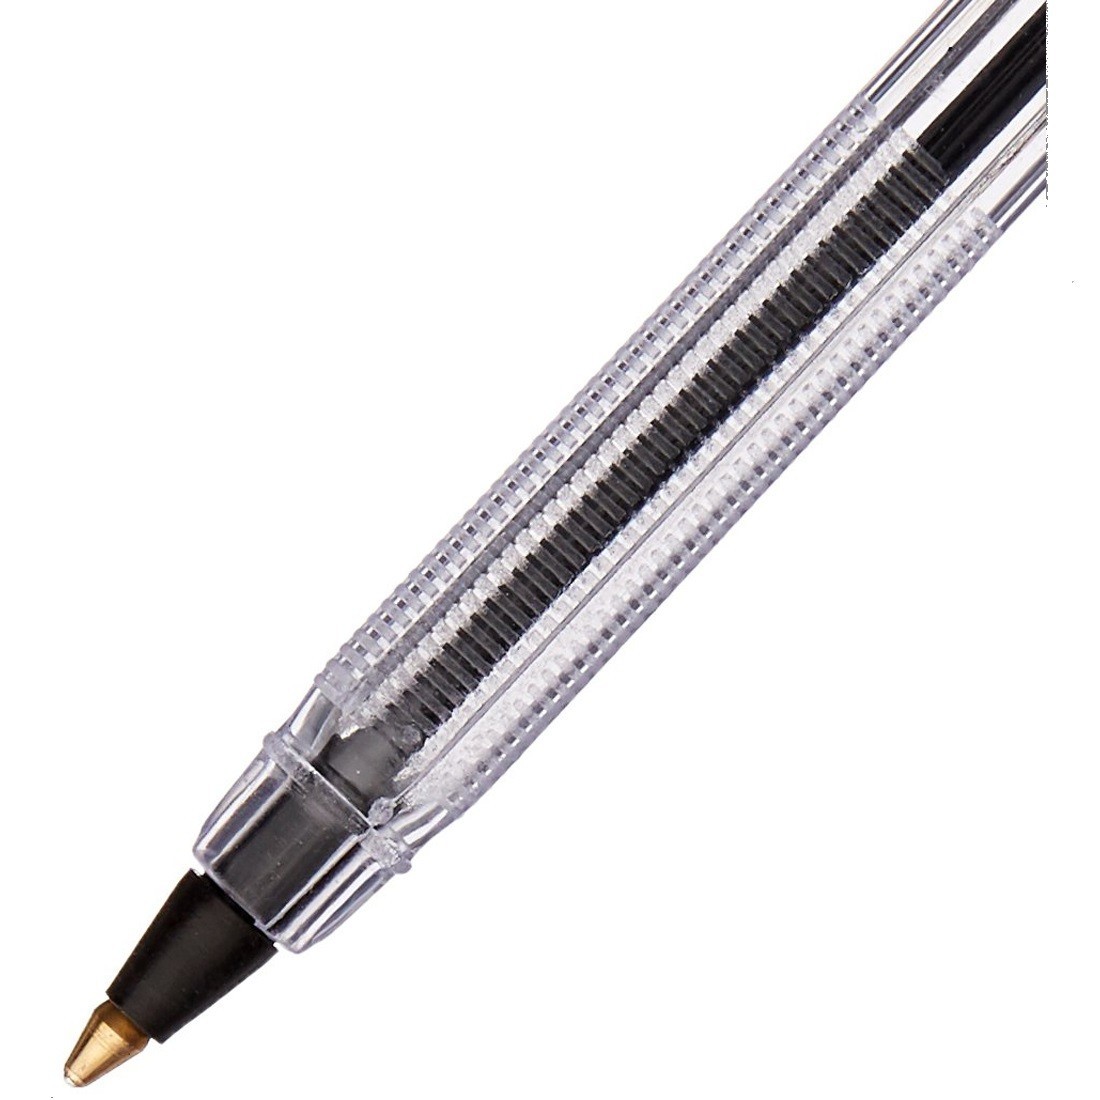 Bazic 24 Color Washable Fiber Tip Pen